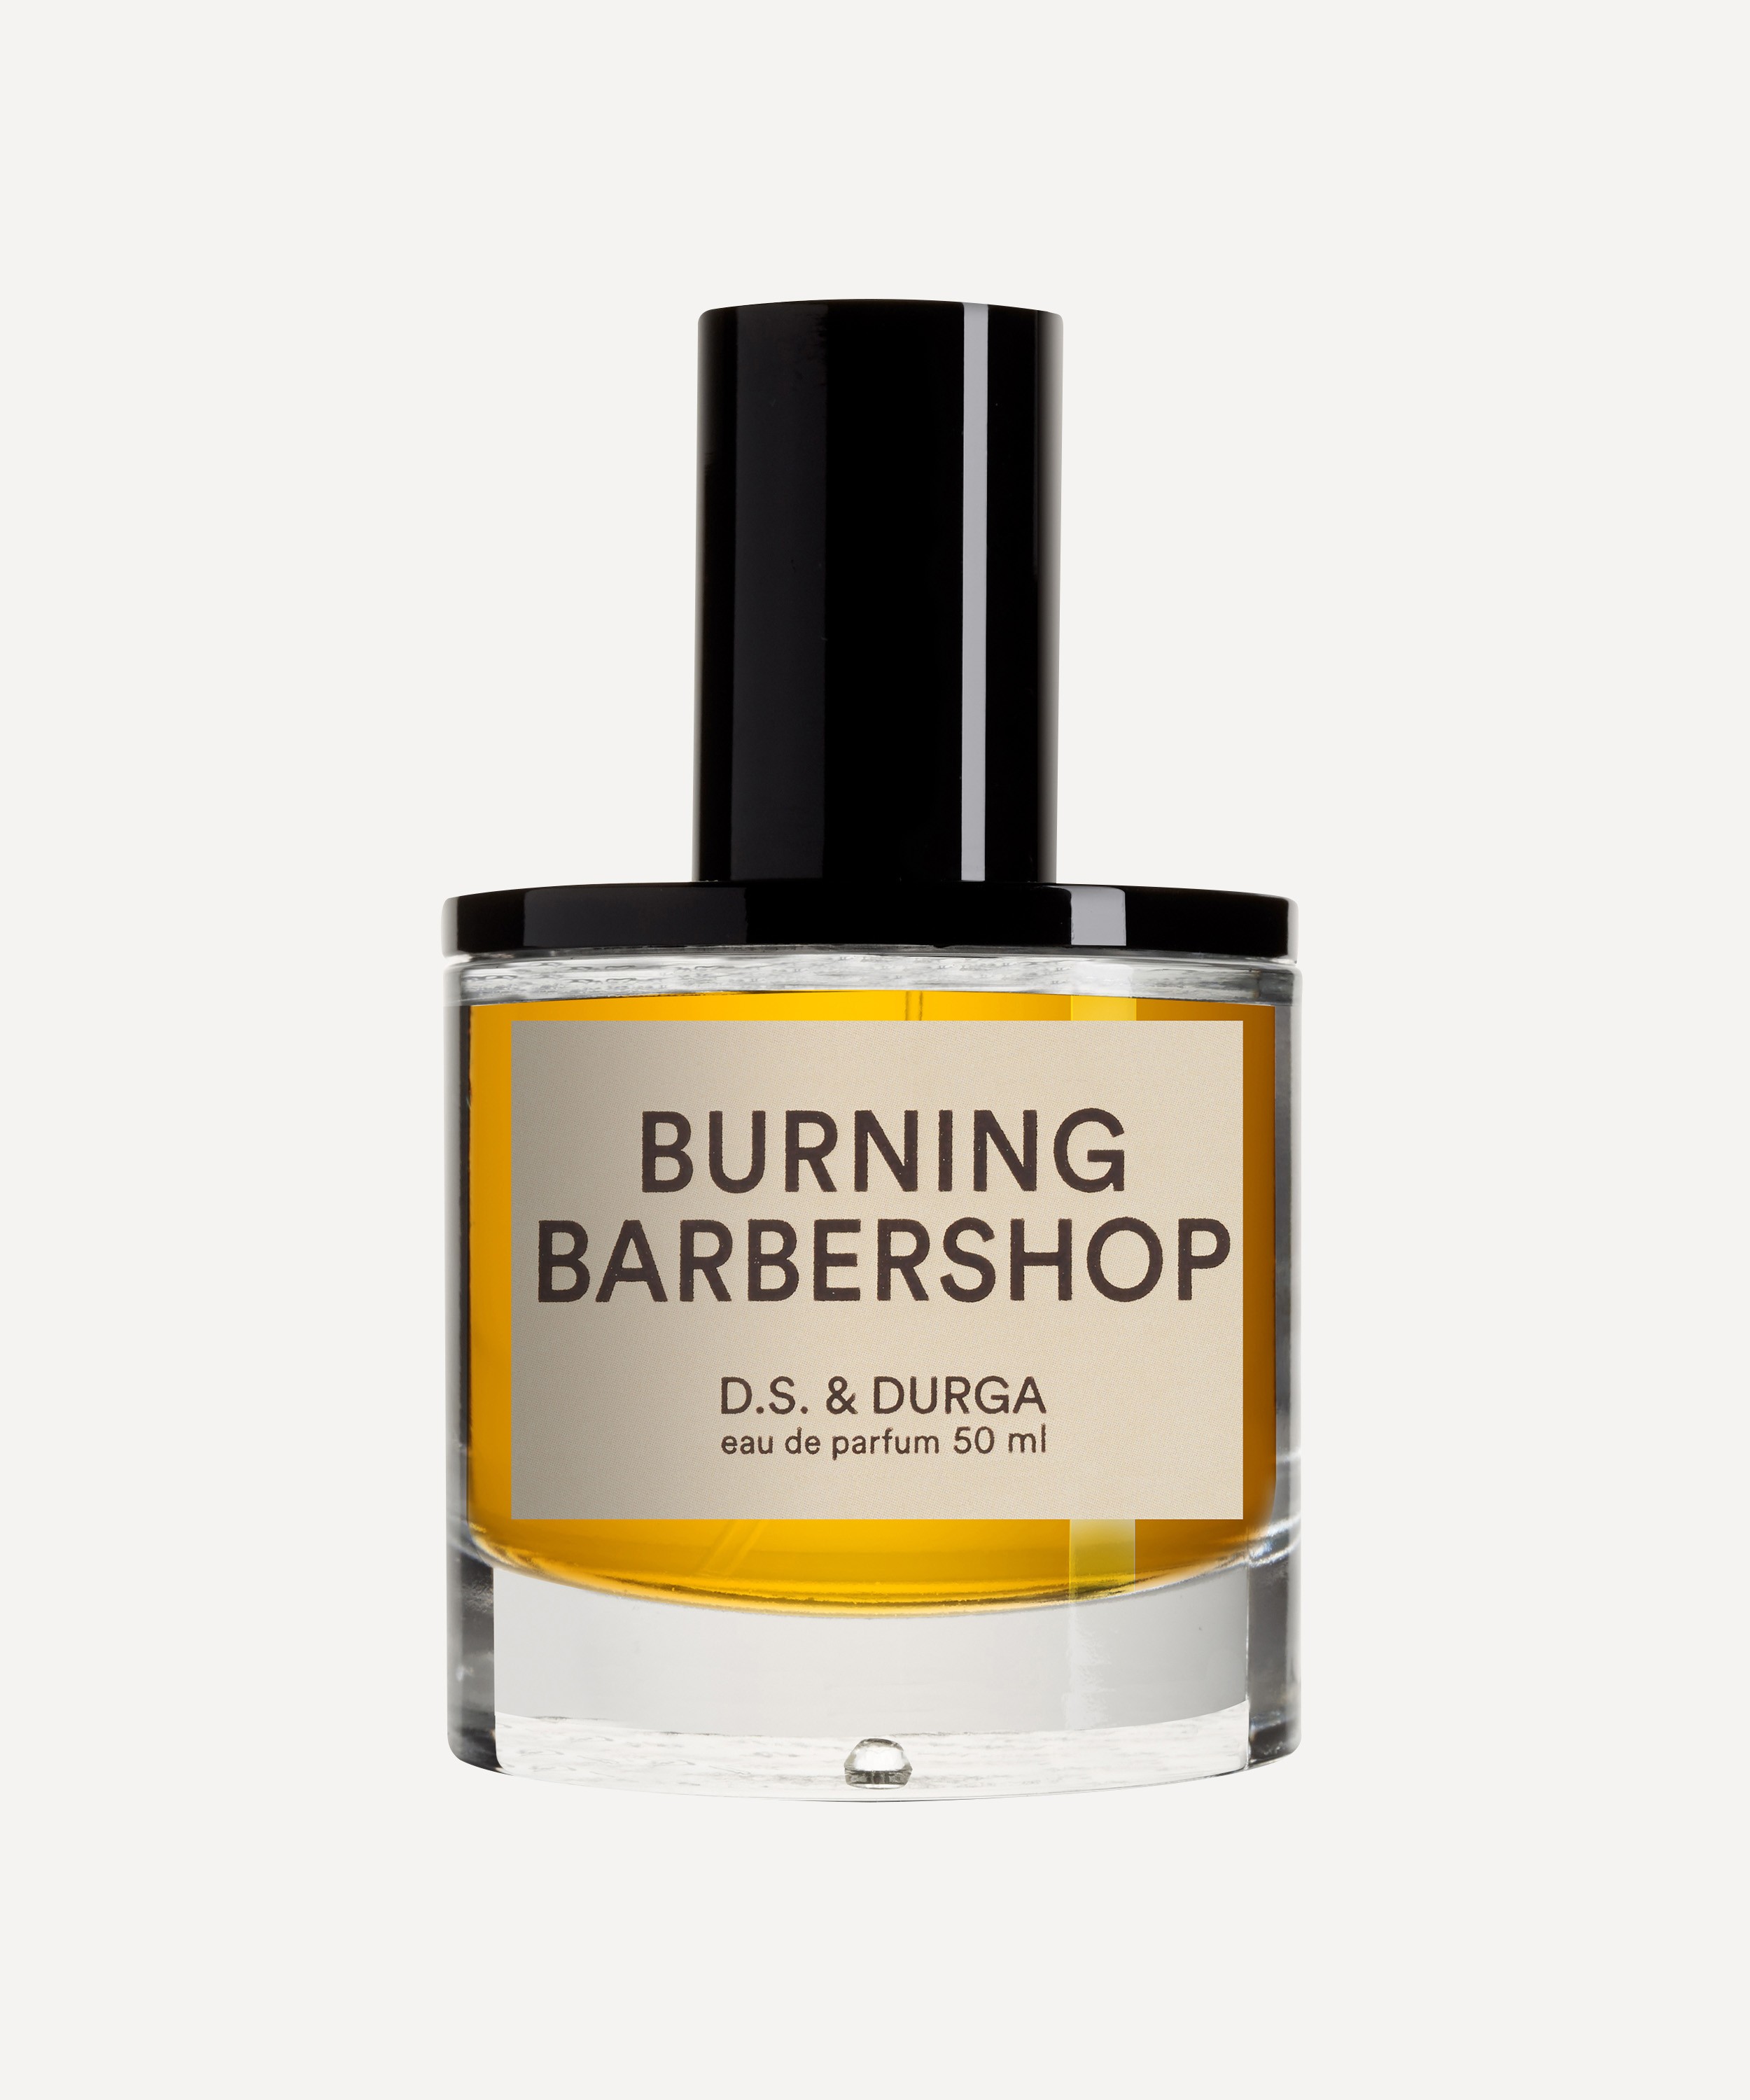 D.S. & Durga - Burning Barbershop Eau de Parfum 50ml